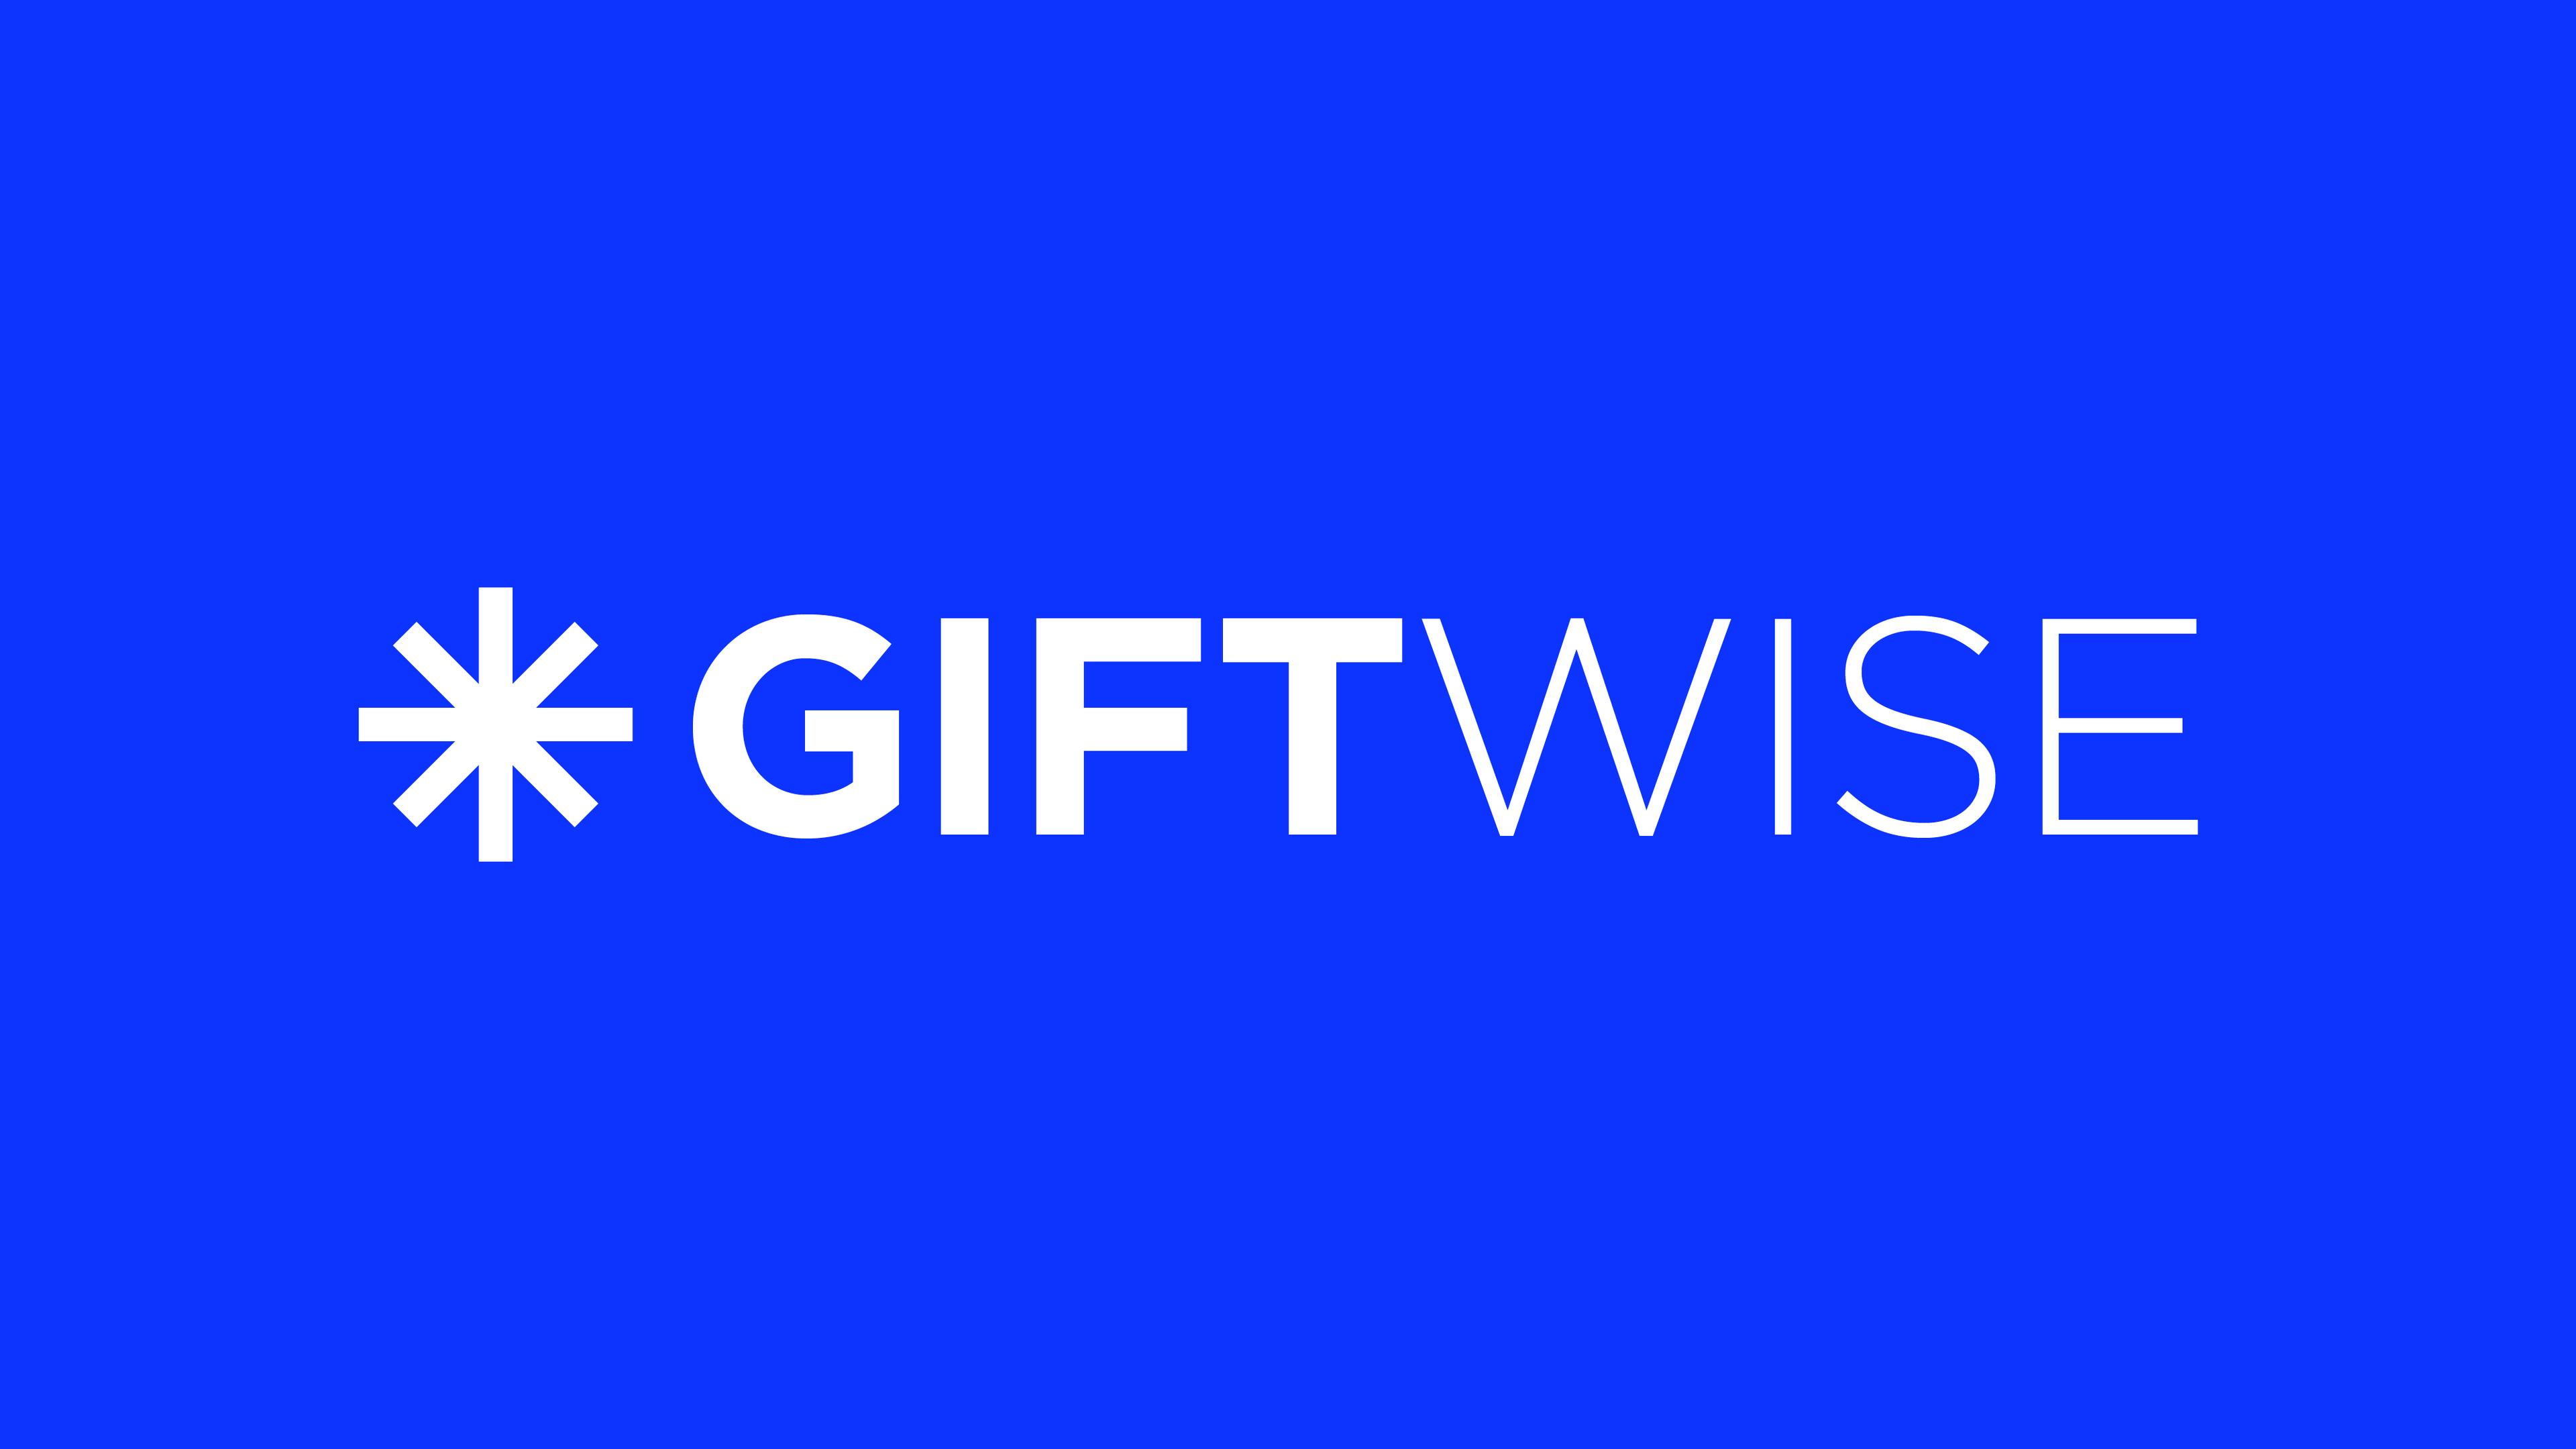 GiftWise logo, white on blue background